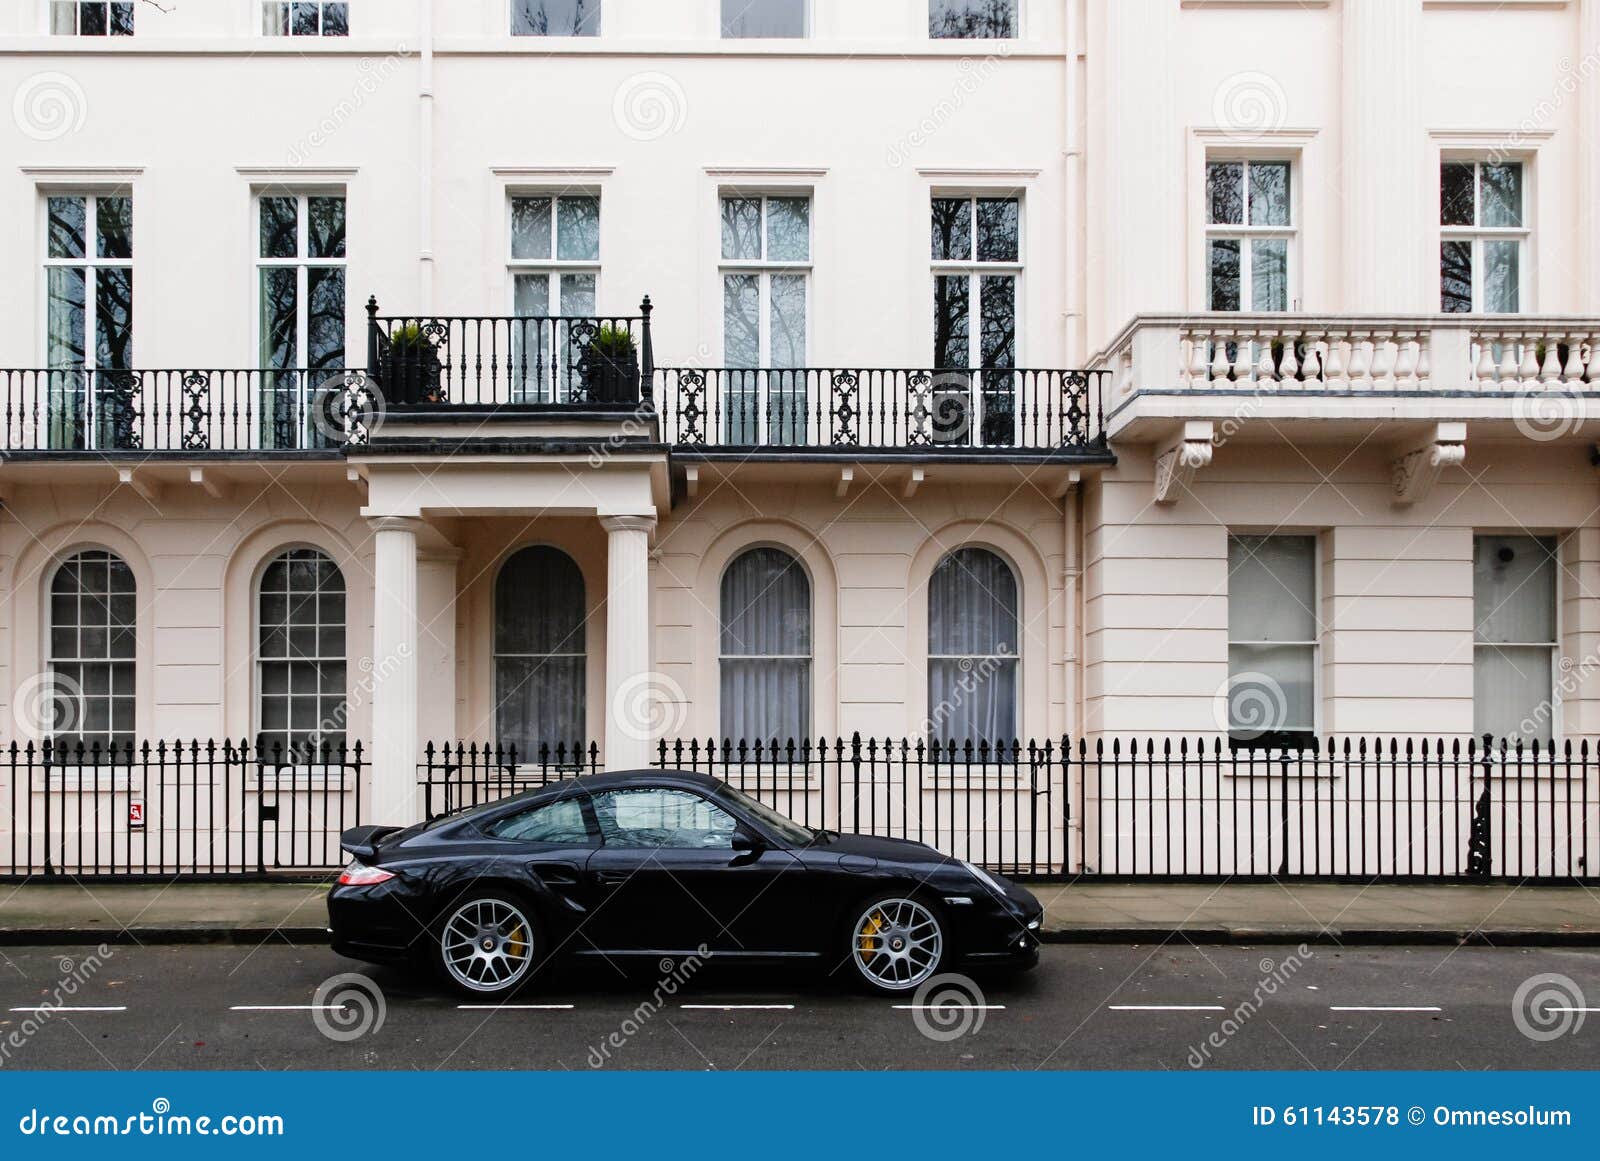 expensive car in a posh london neighborhood